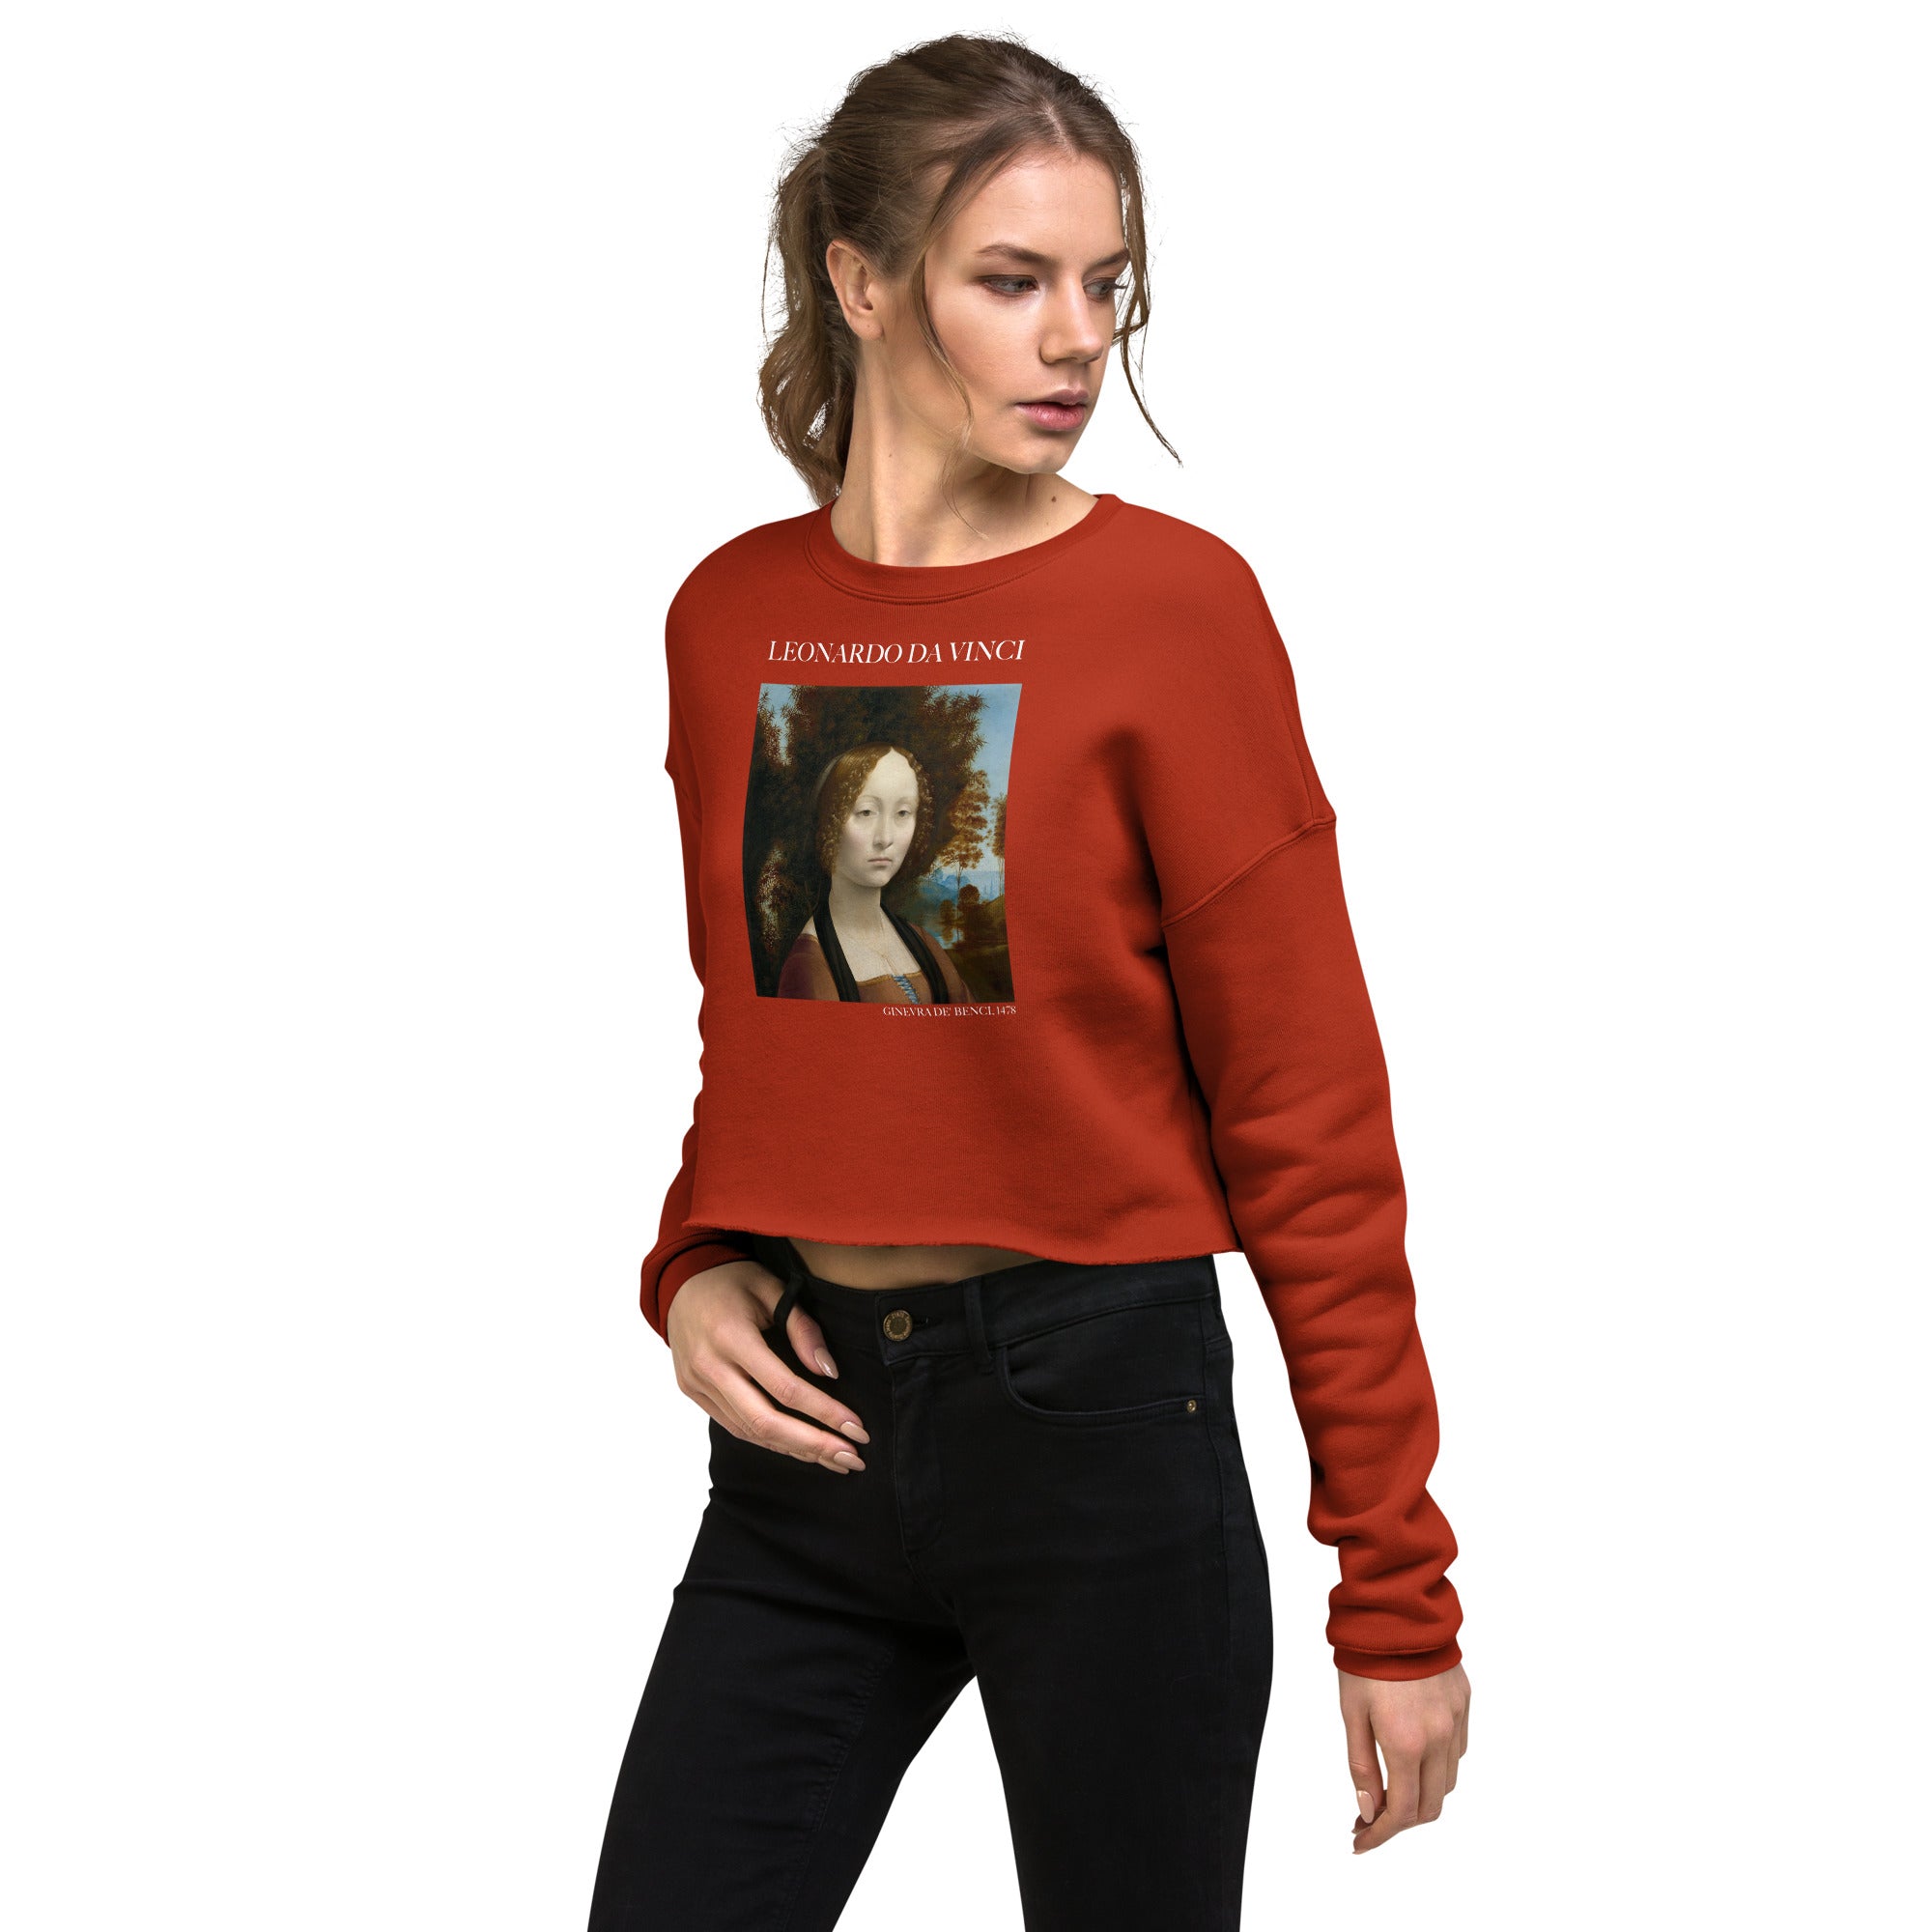 Kurzes Sweatshirt mit berühmtem Gemälde „Ginevra de‘ Benci“ von Leonardo da Vinci | Kurzes Sweatshirt mit Premium-Kunstmotiv